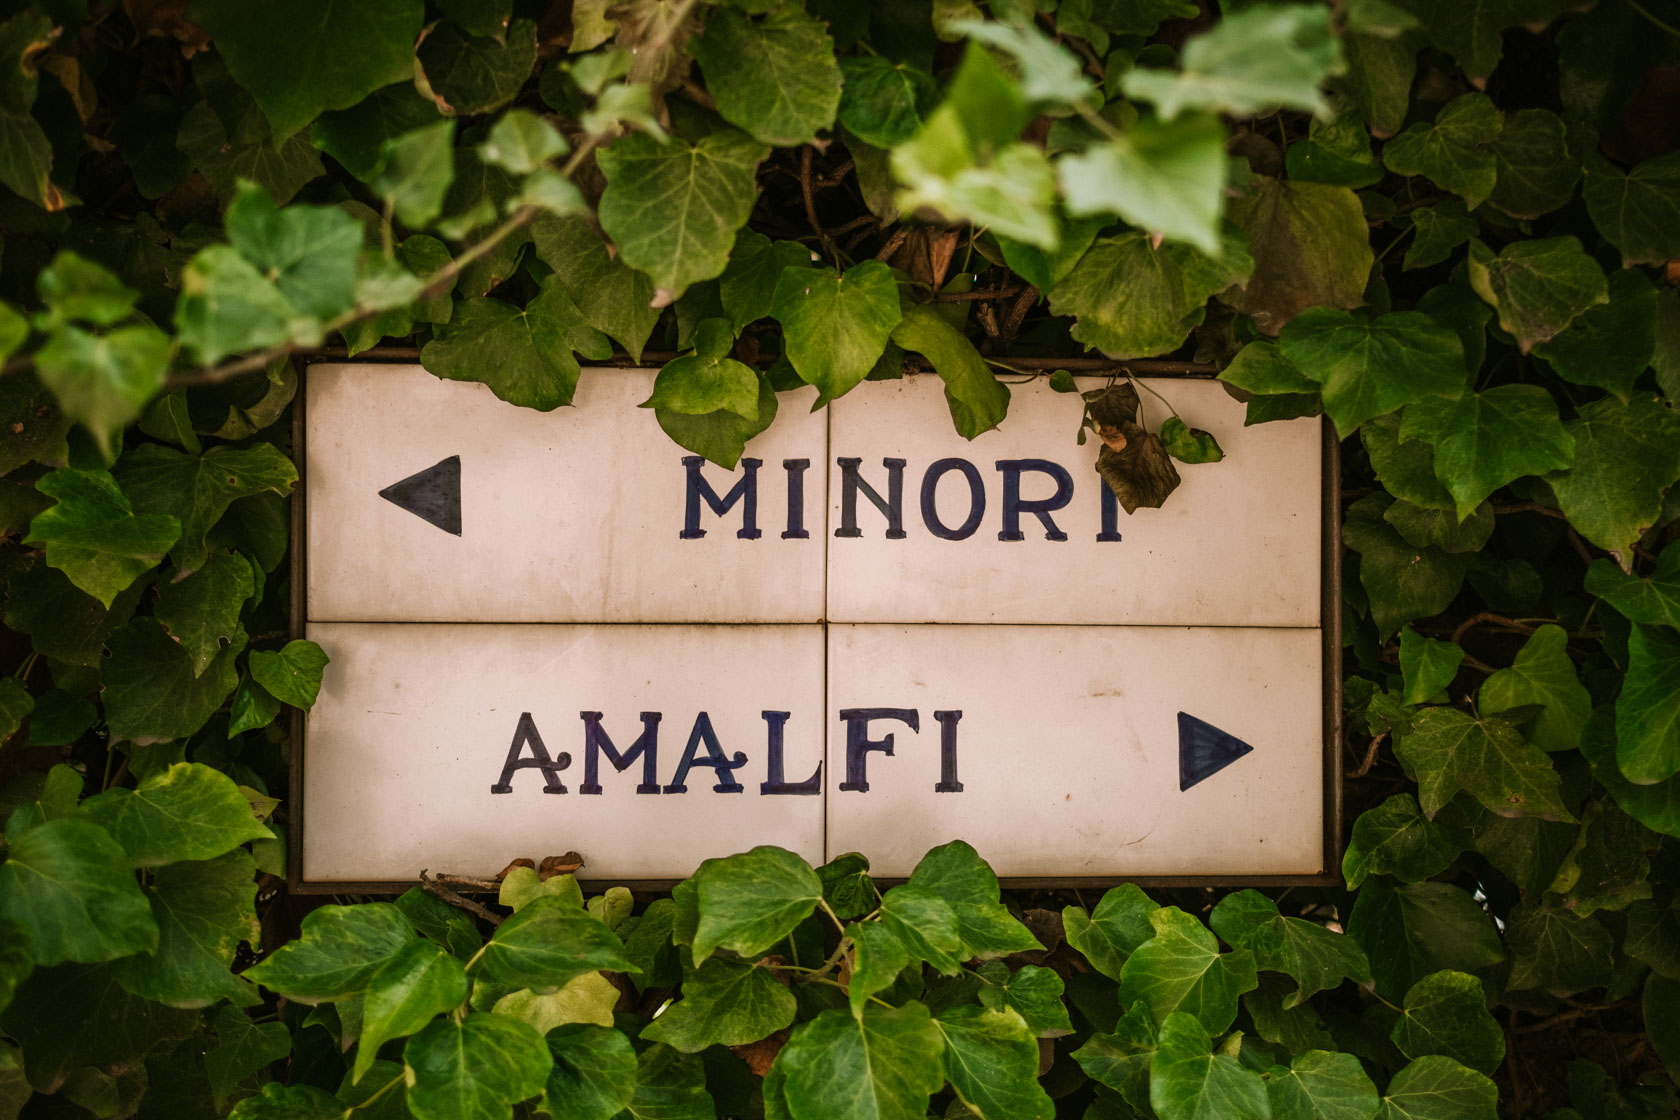 Minori and Amalfi sign